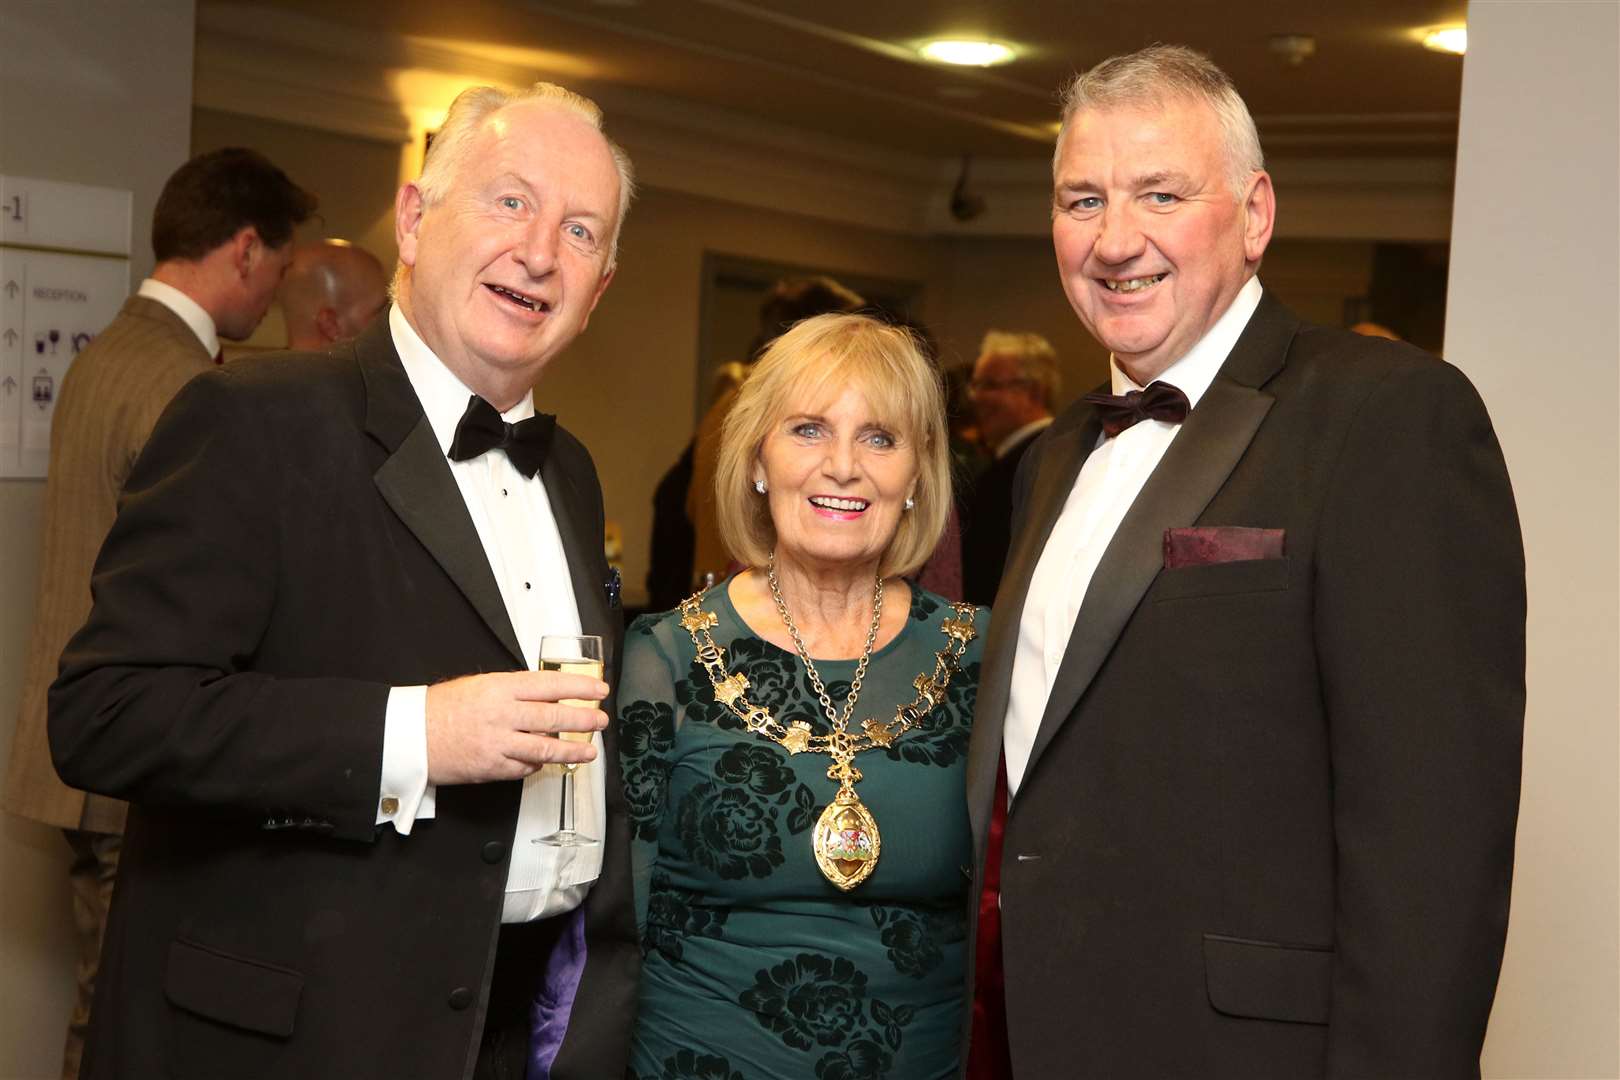 Don Lawson, Provost Helen Carmichael and John McDonald at Inverness BID Best Bar None Awards 2019.